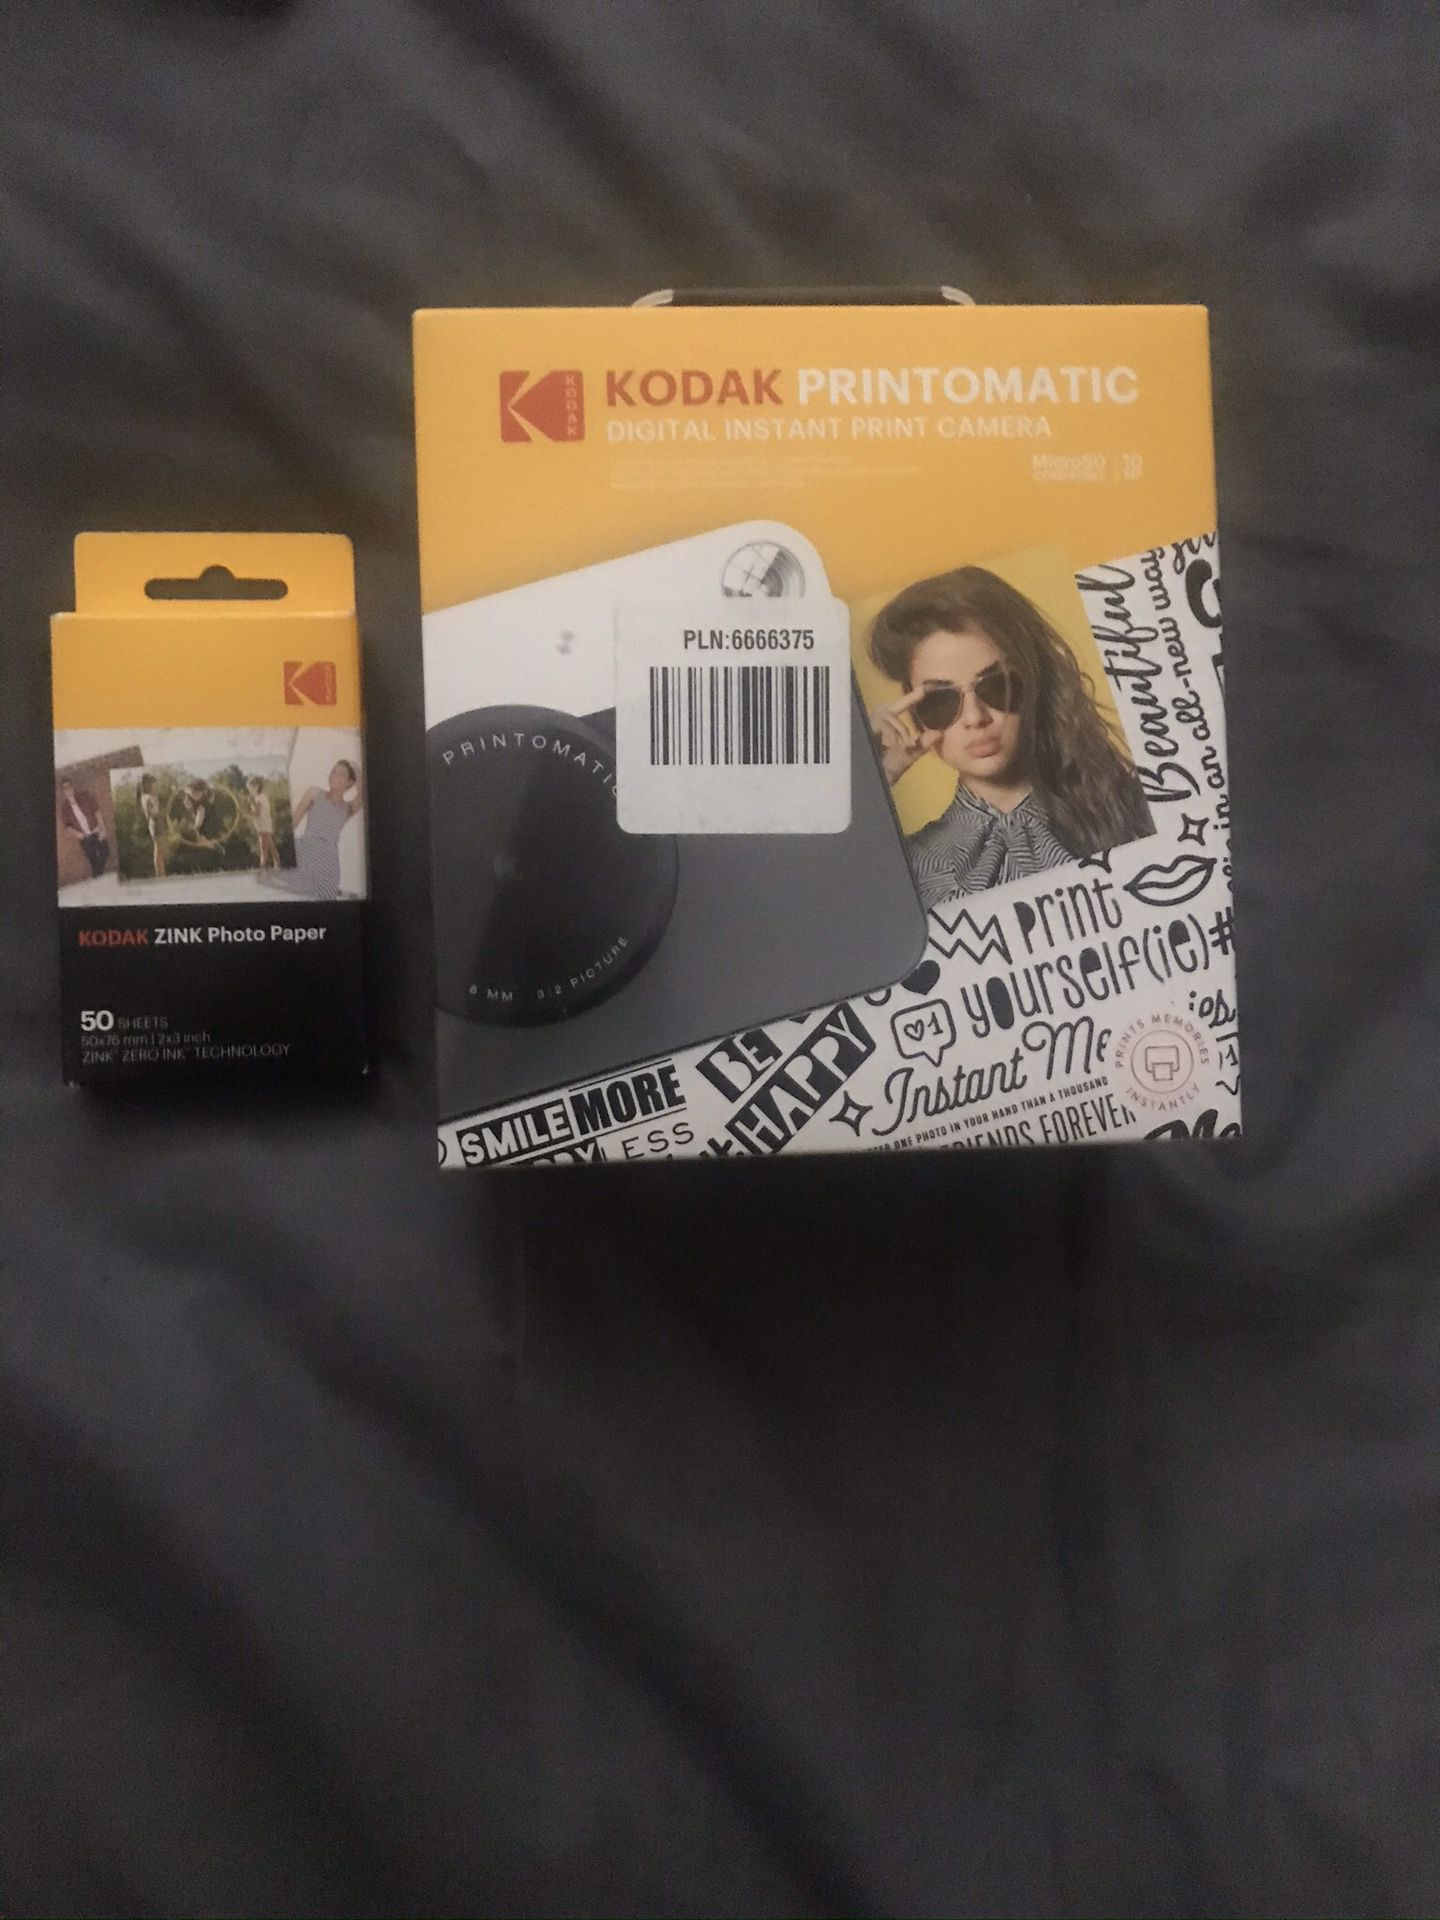 Kodak printomatic digital instant print camera